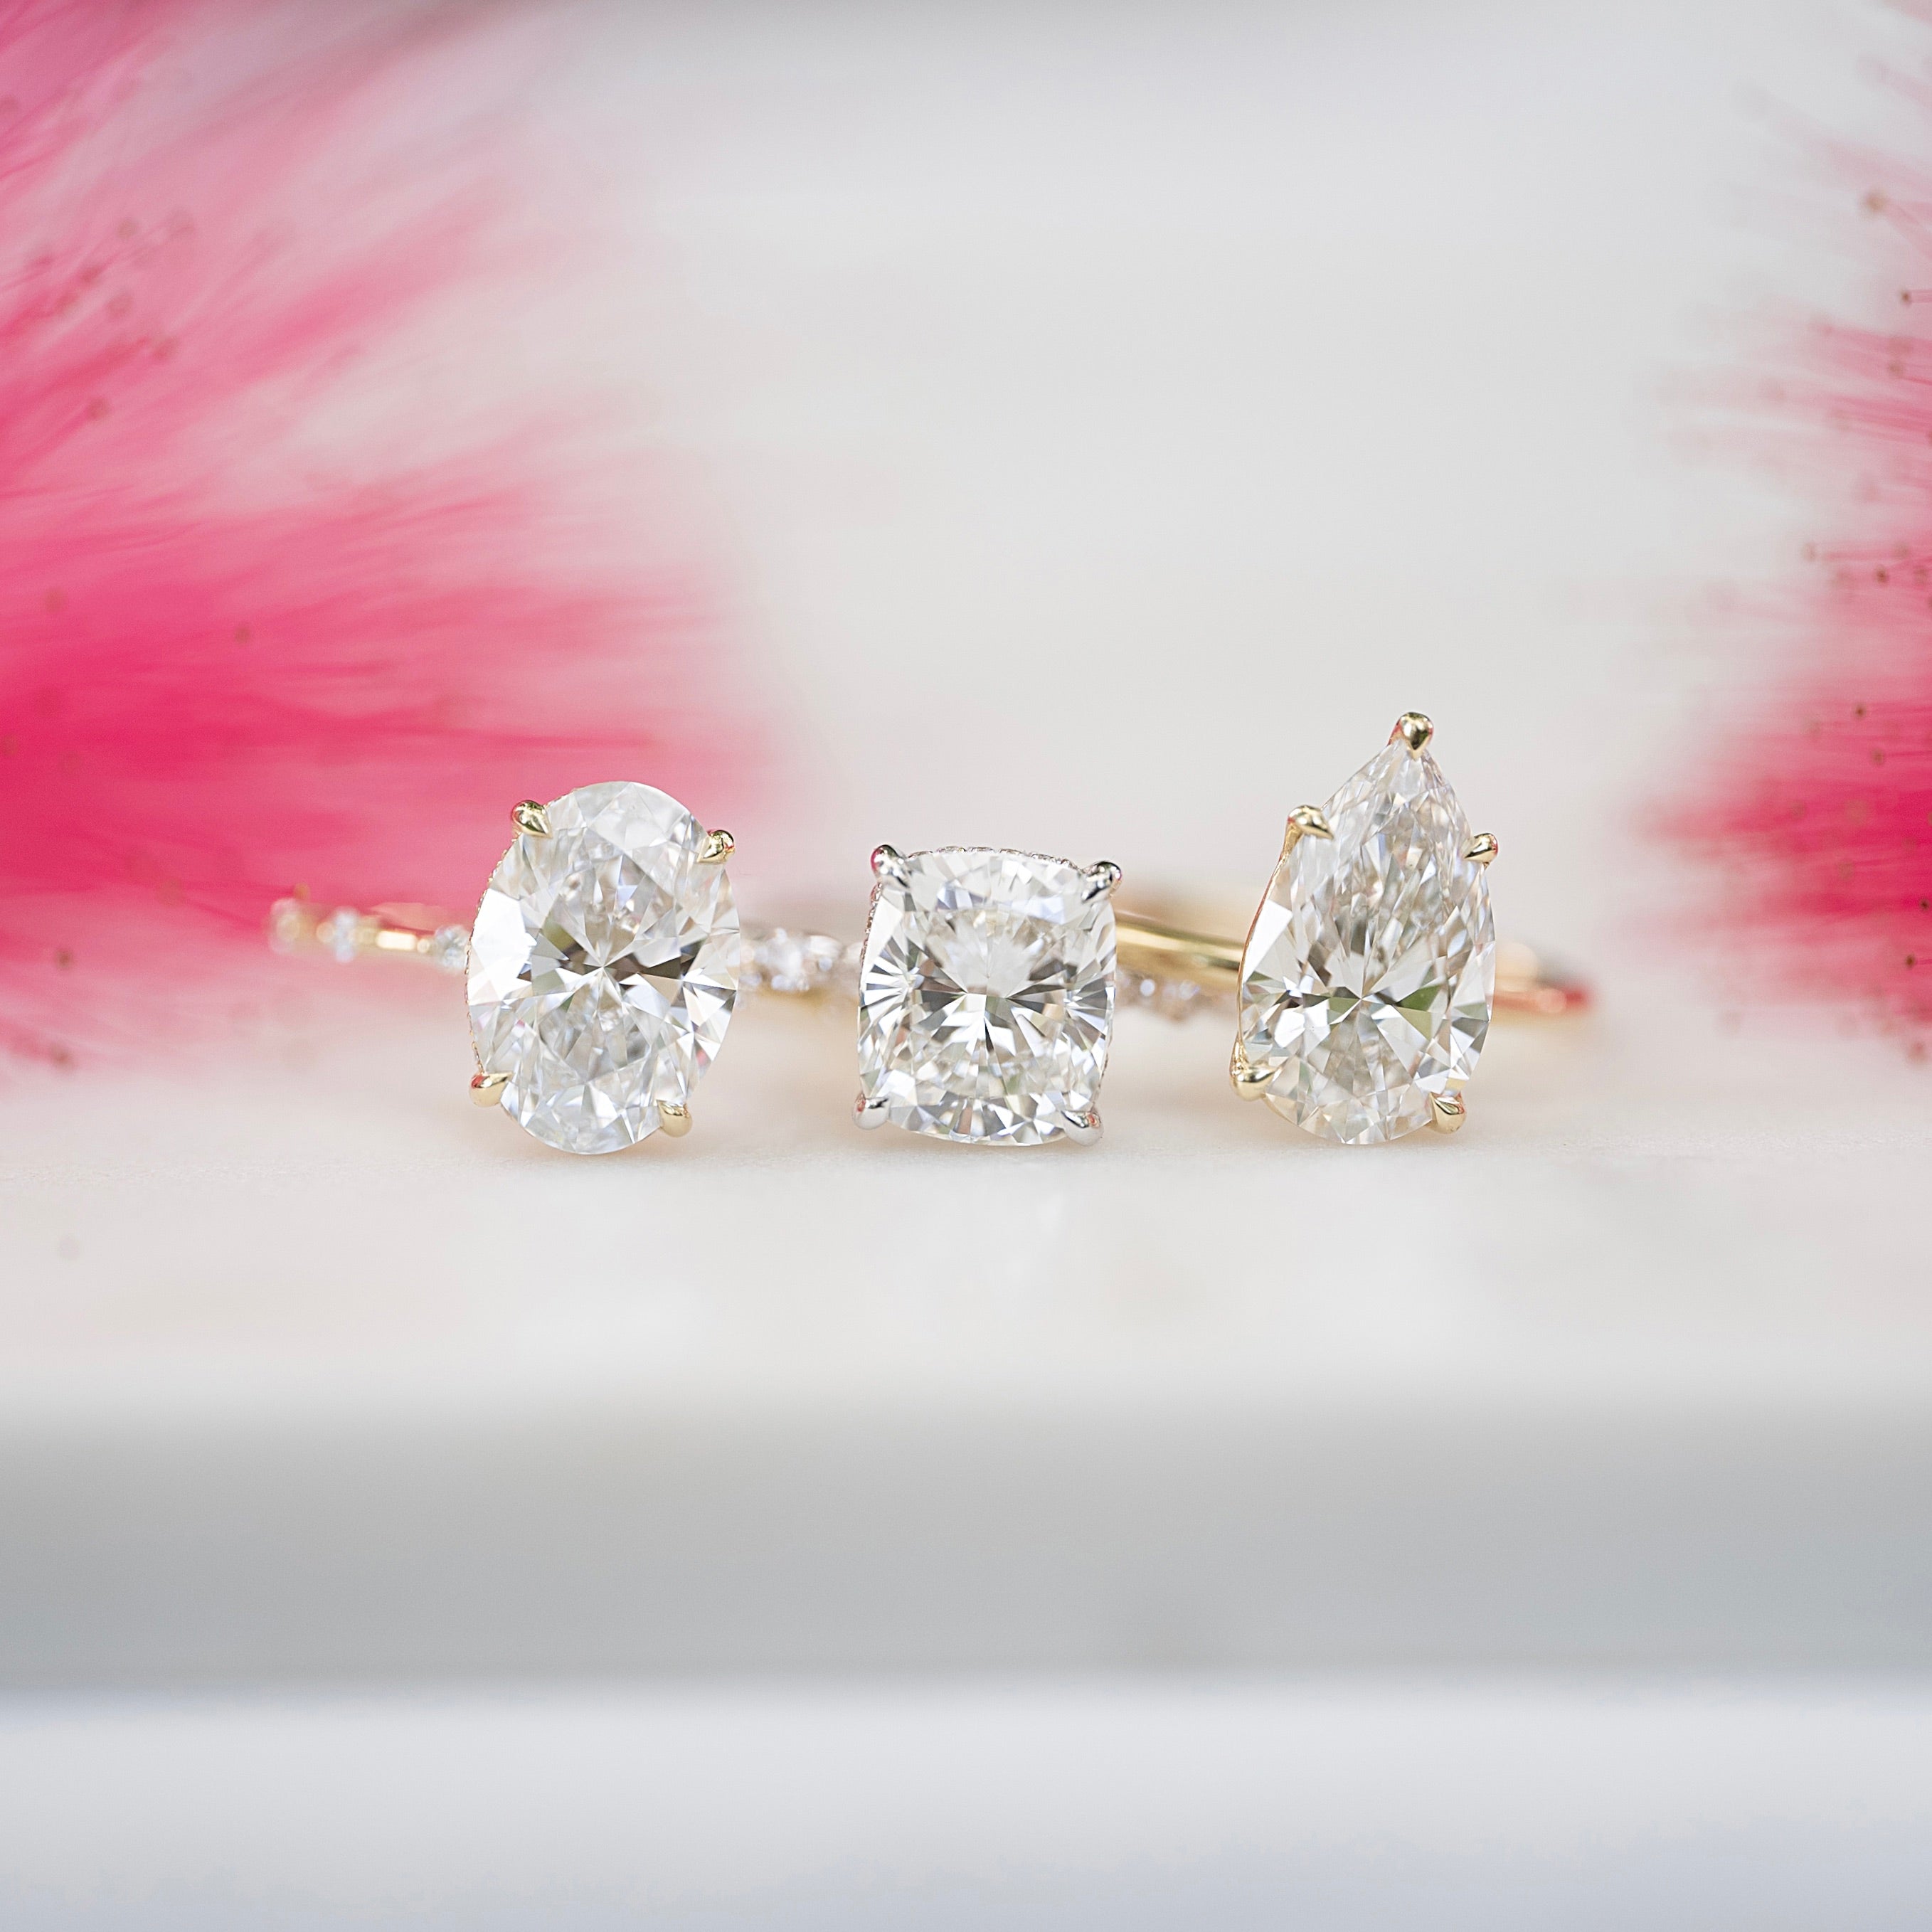 We Love Diamonds, Diamond Jewellery Sizing Guide